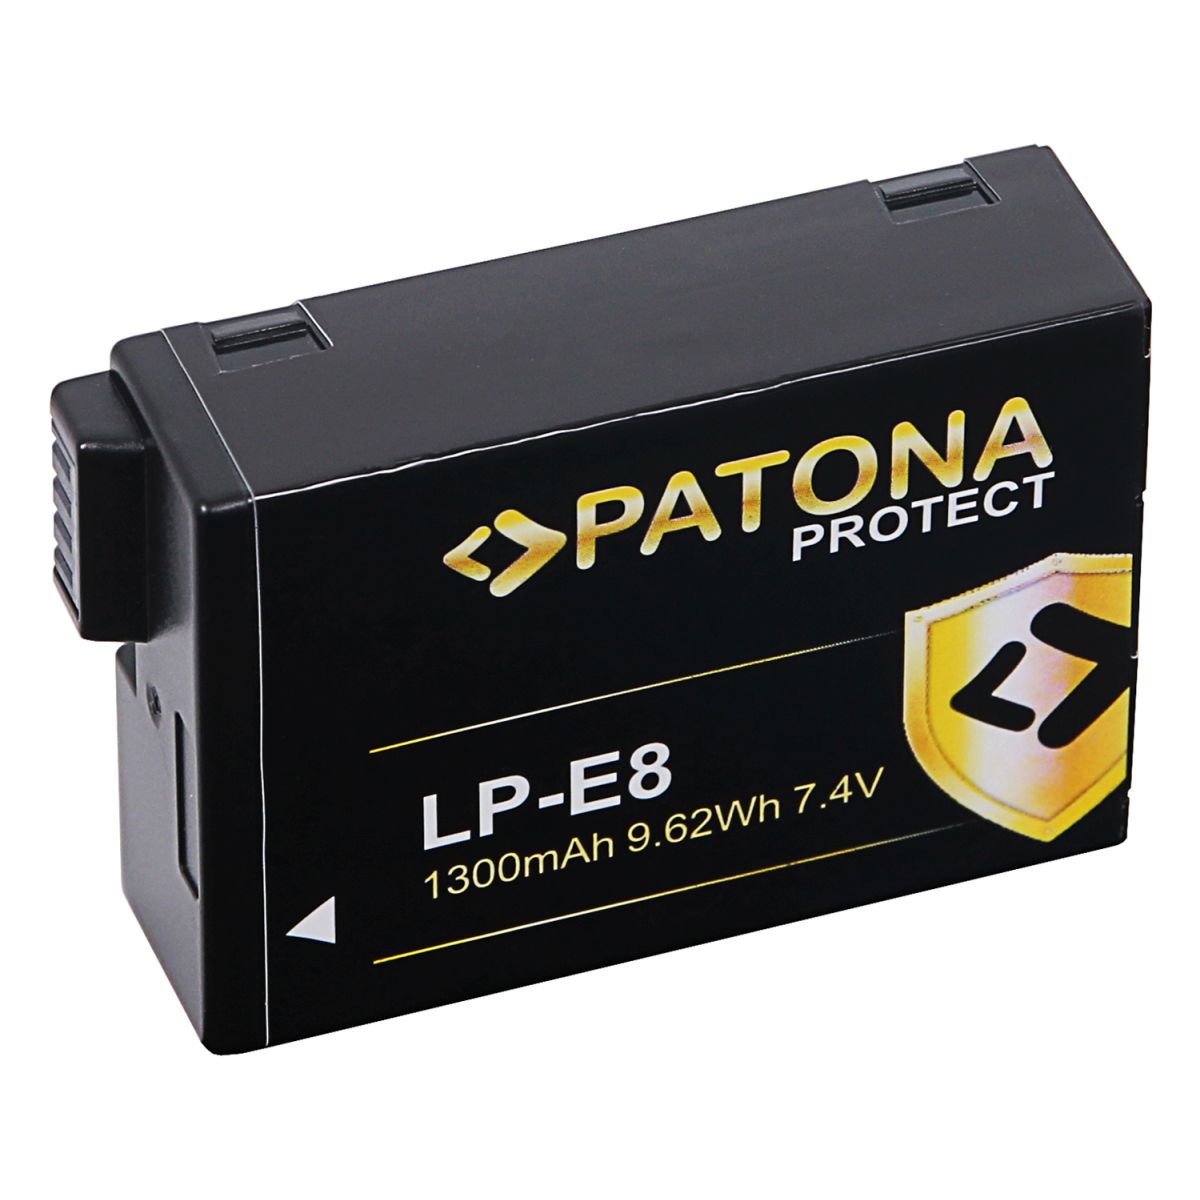 Patona Protect Akku Canon LP-E8